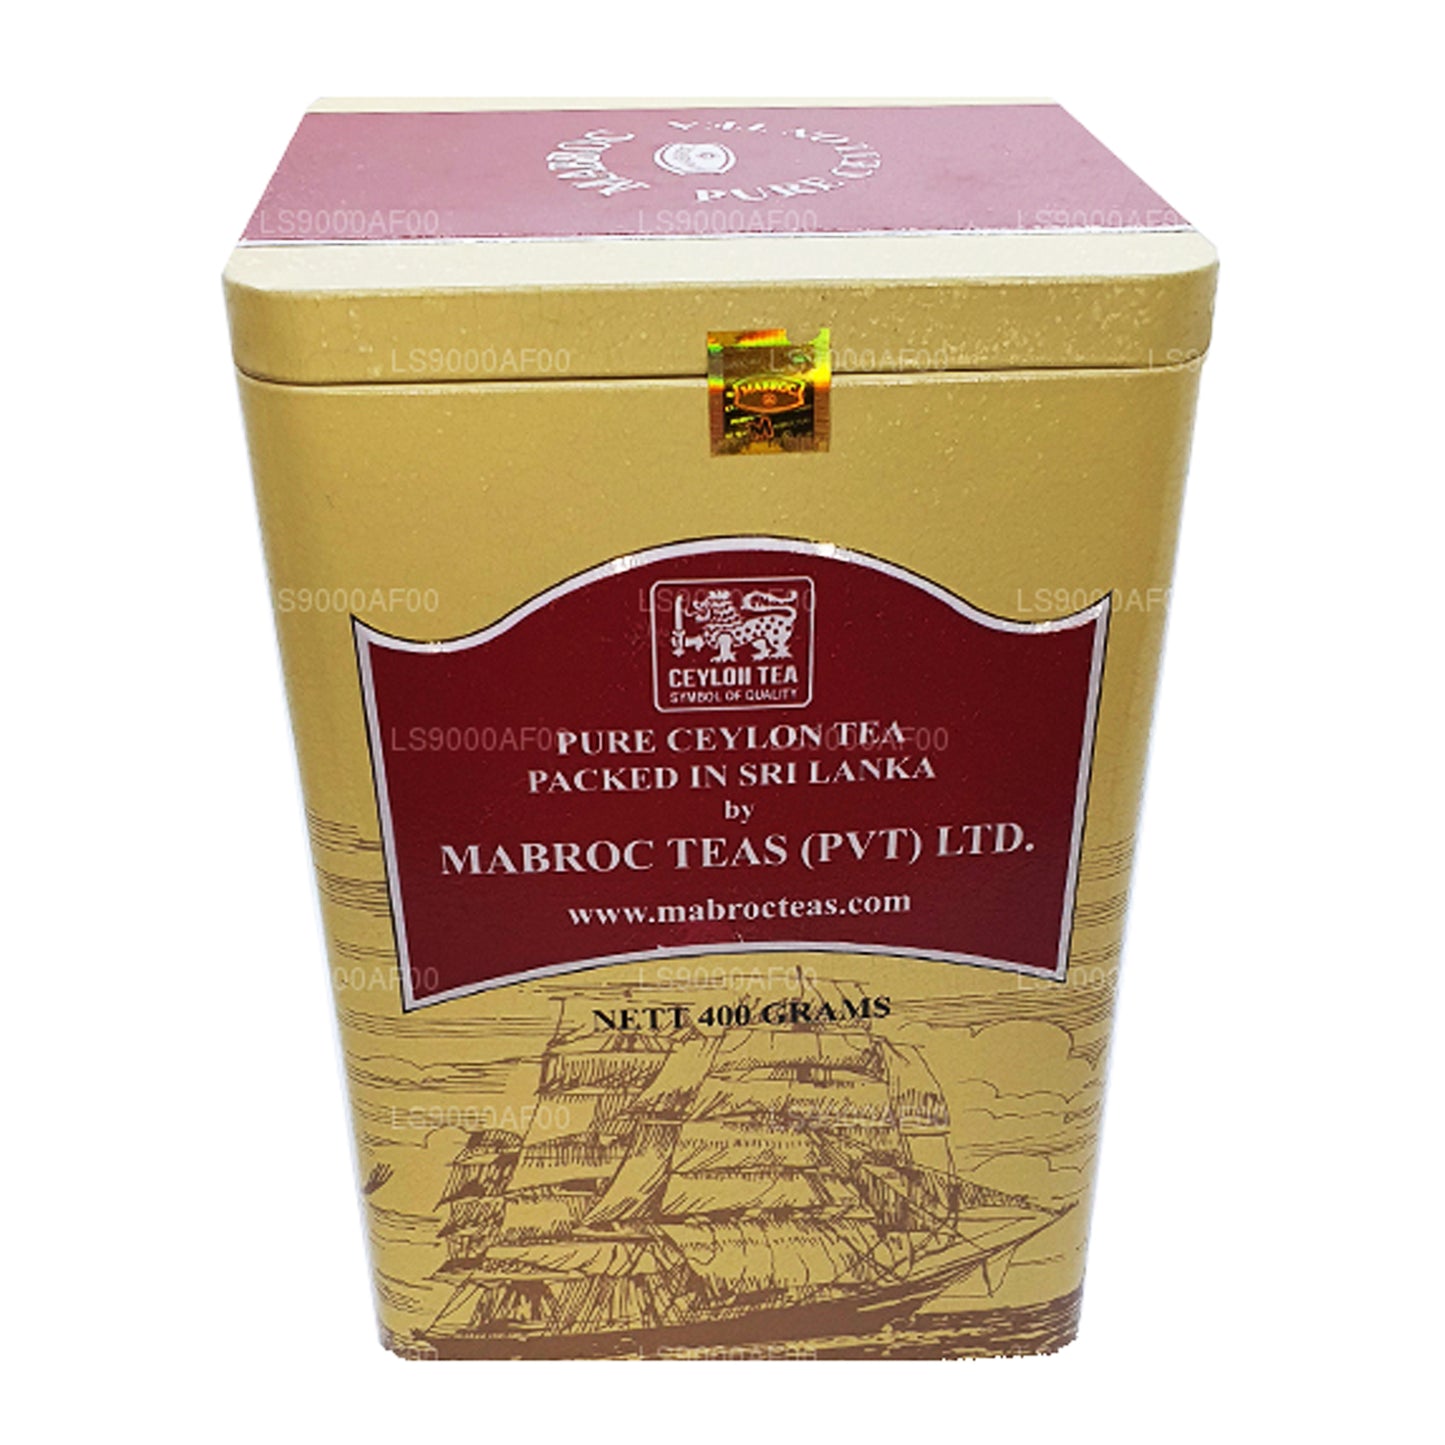 Mabroc Classic Long Leaf Orange Peoke Tea (400g)